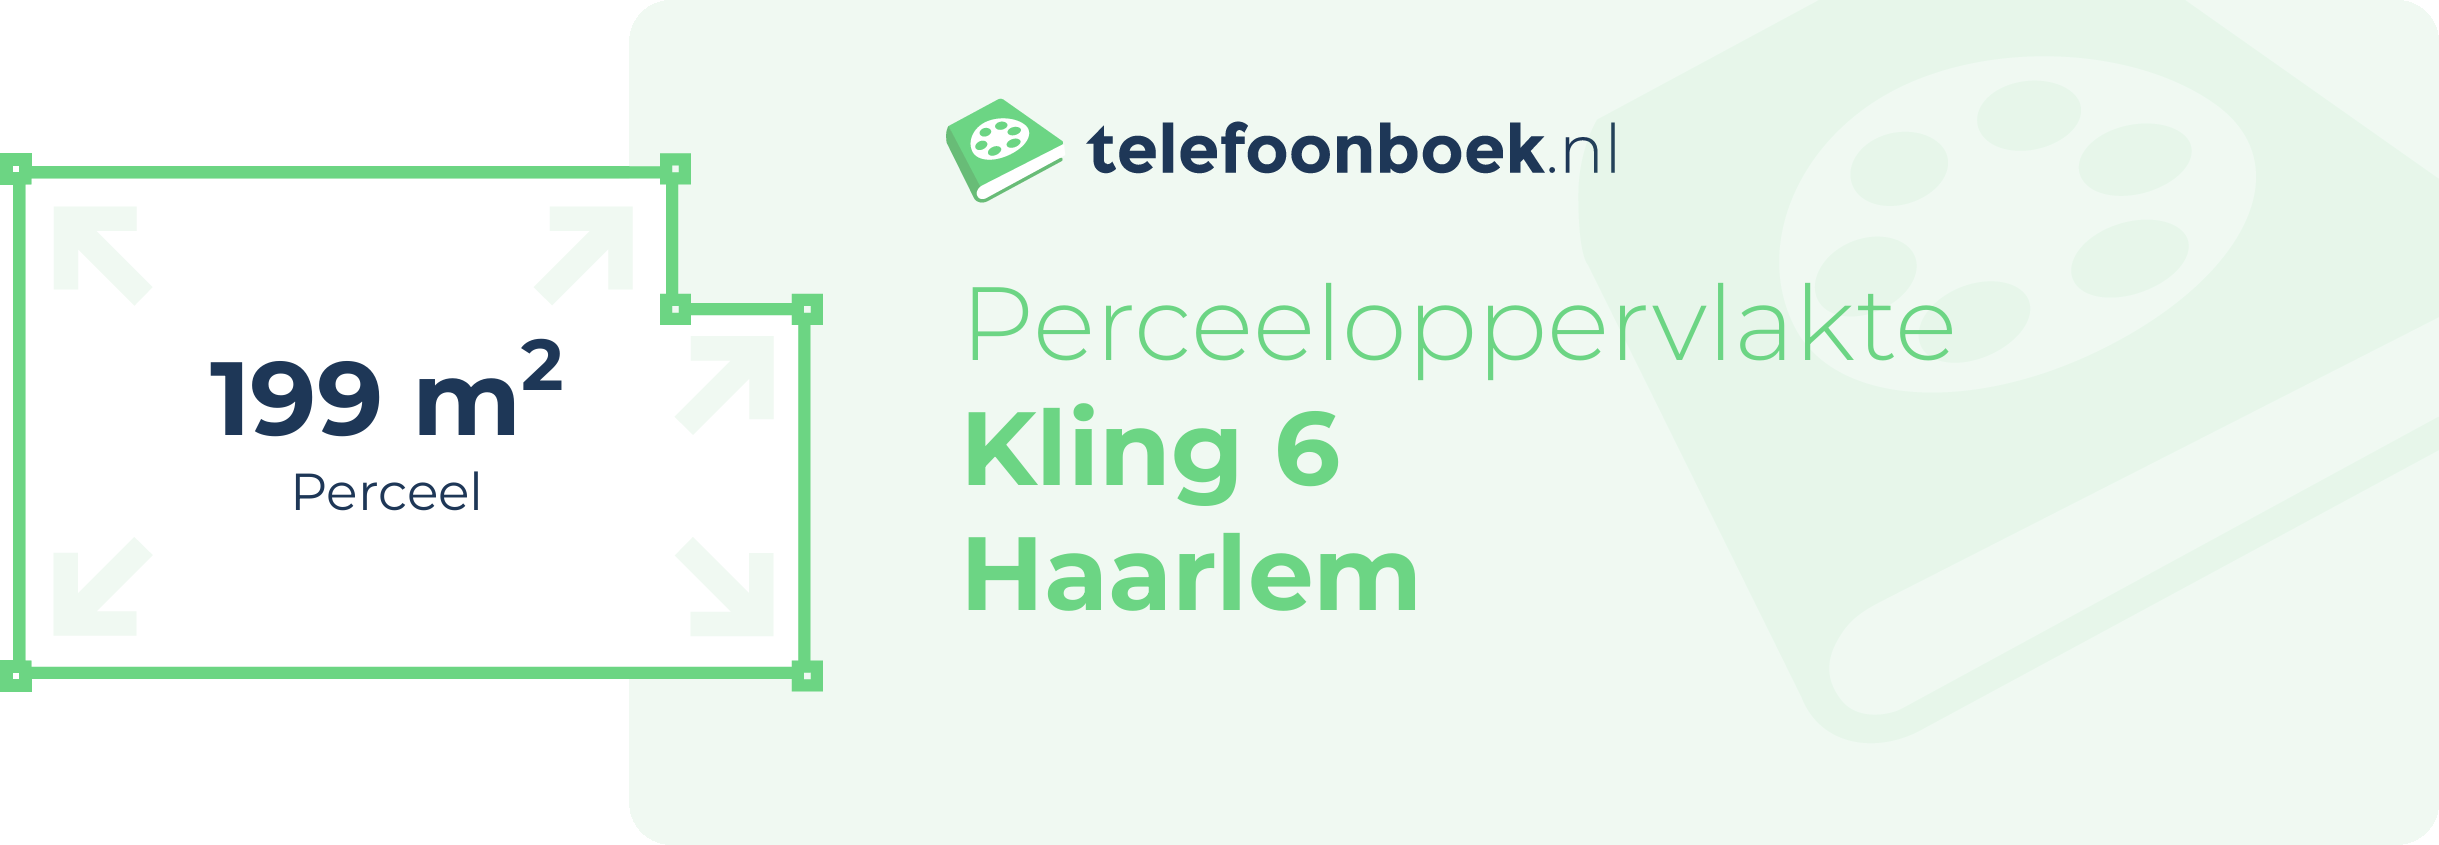 Perceeloppervlakte Kling 6 Haarlem